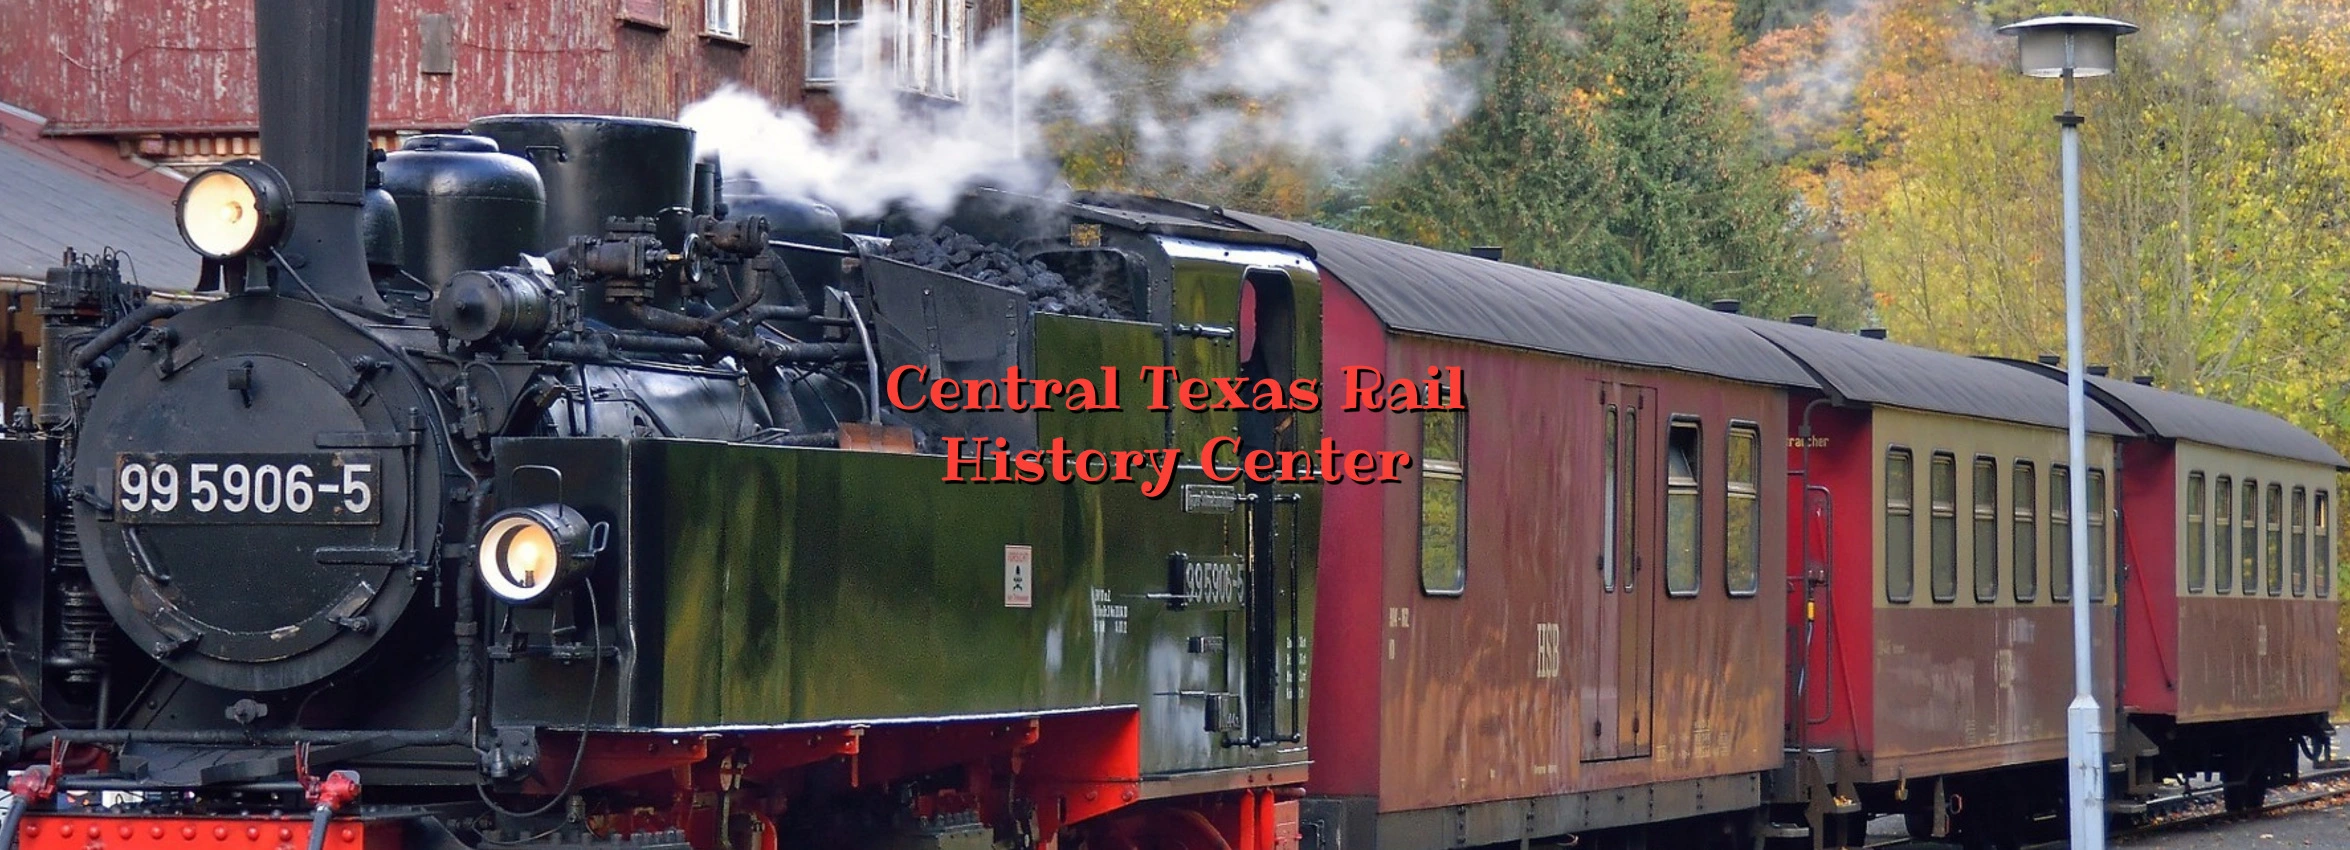 Central-Texas-Rail-History-Center_Desktop_ET